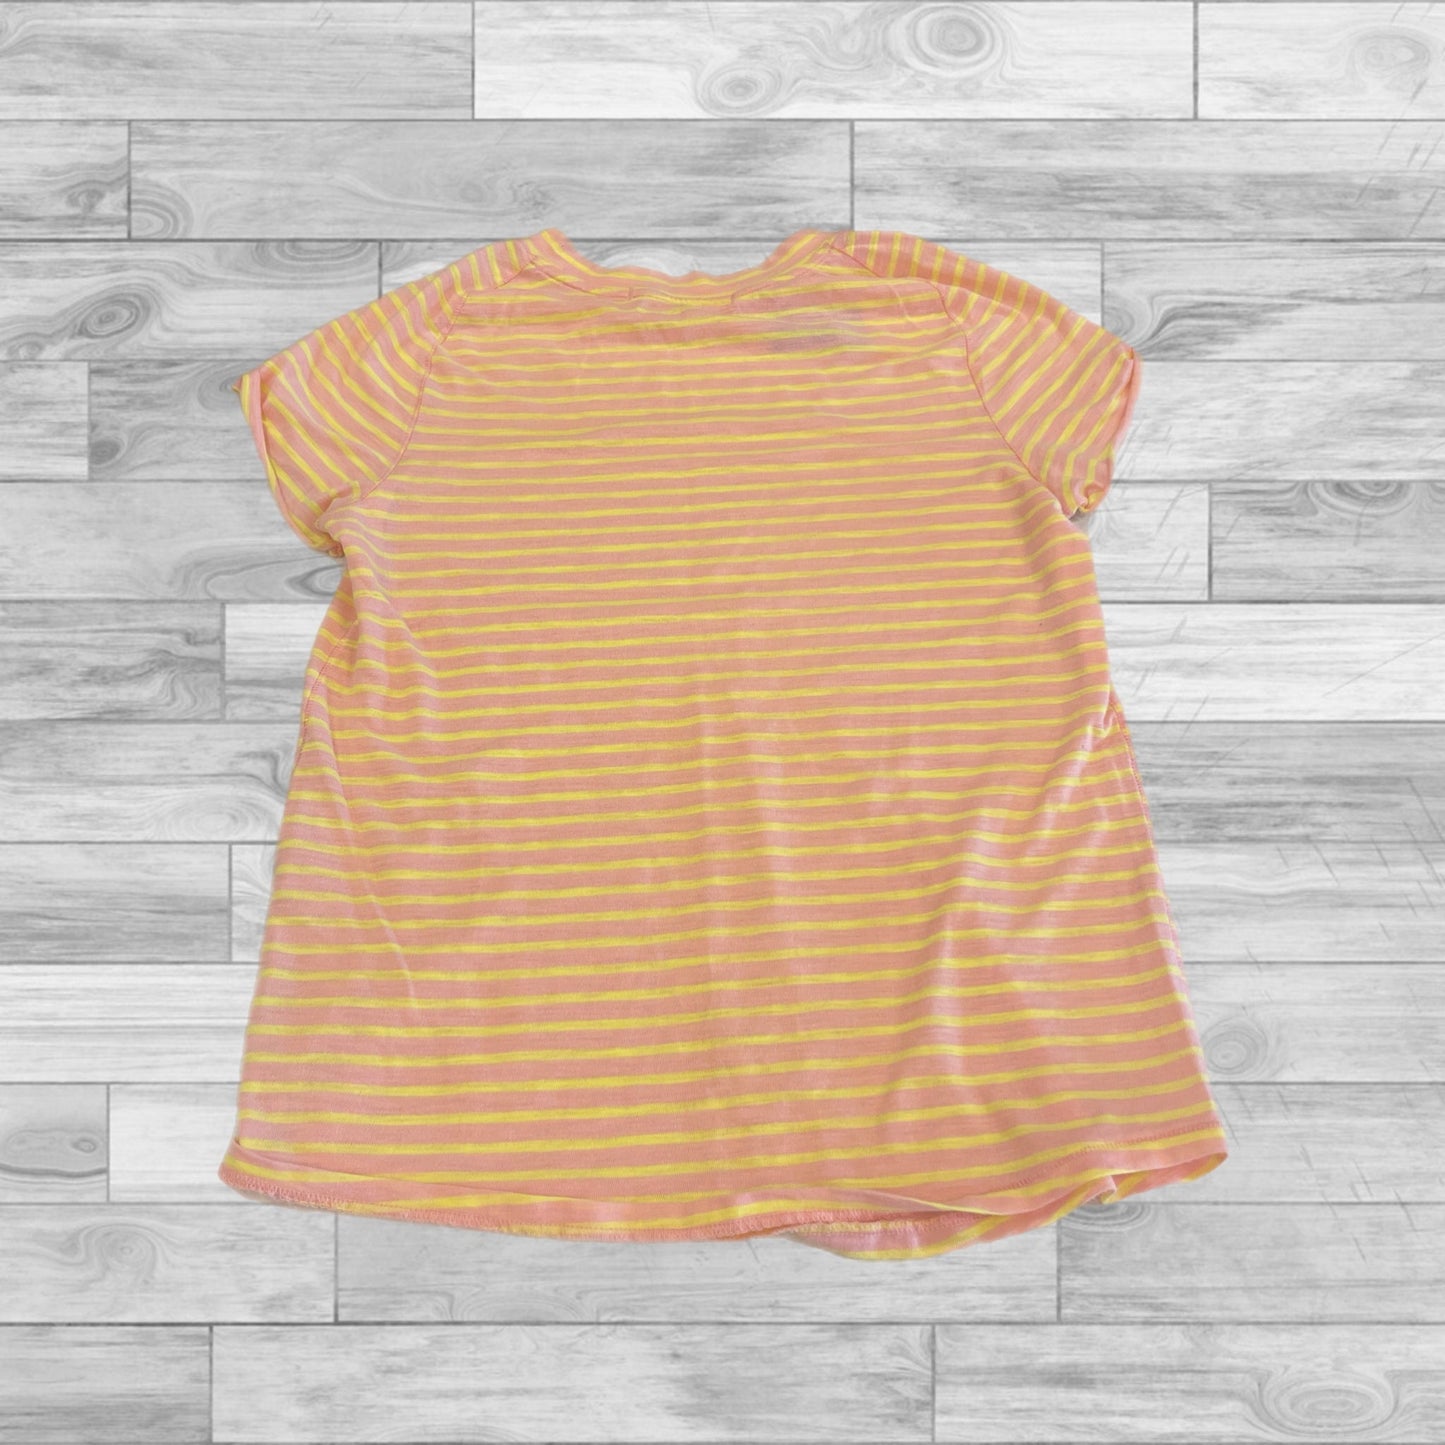 Orange & Yellow Top Short Sleeve Basic We The Free, Size L